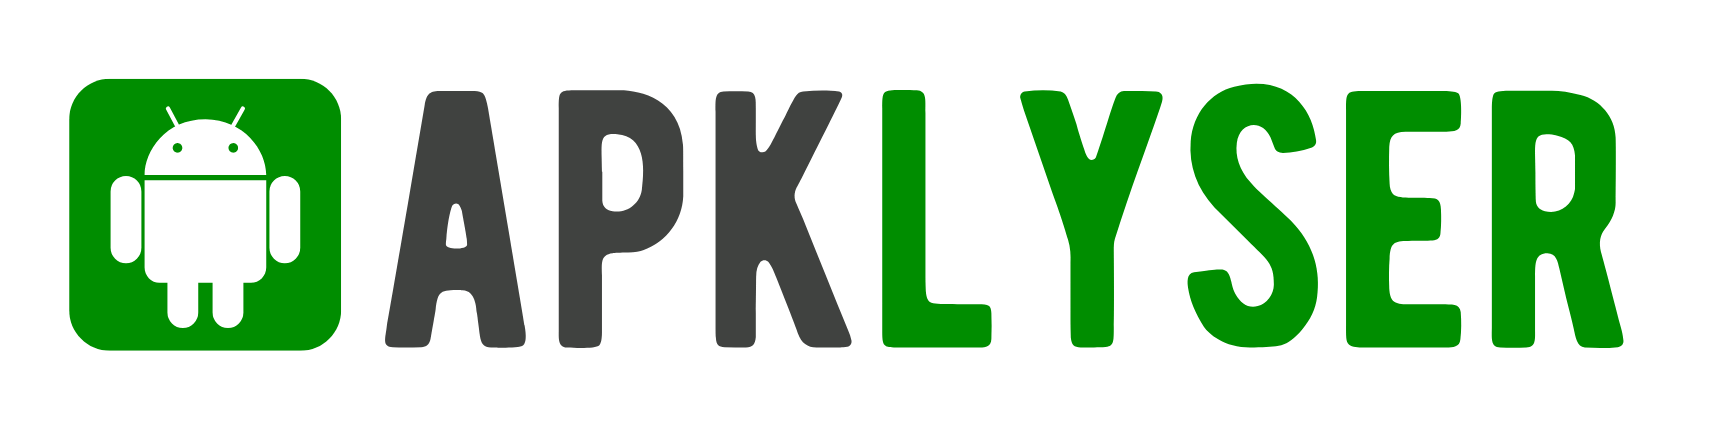 apklyser-logo